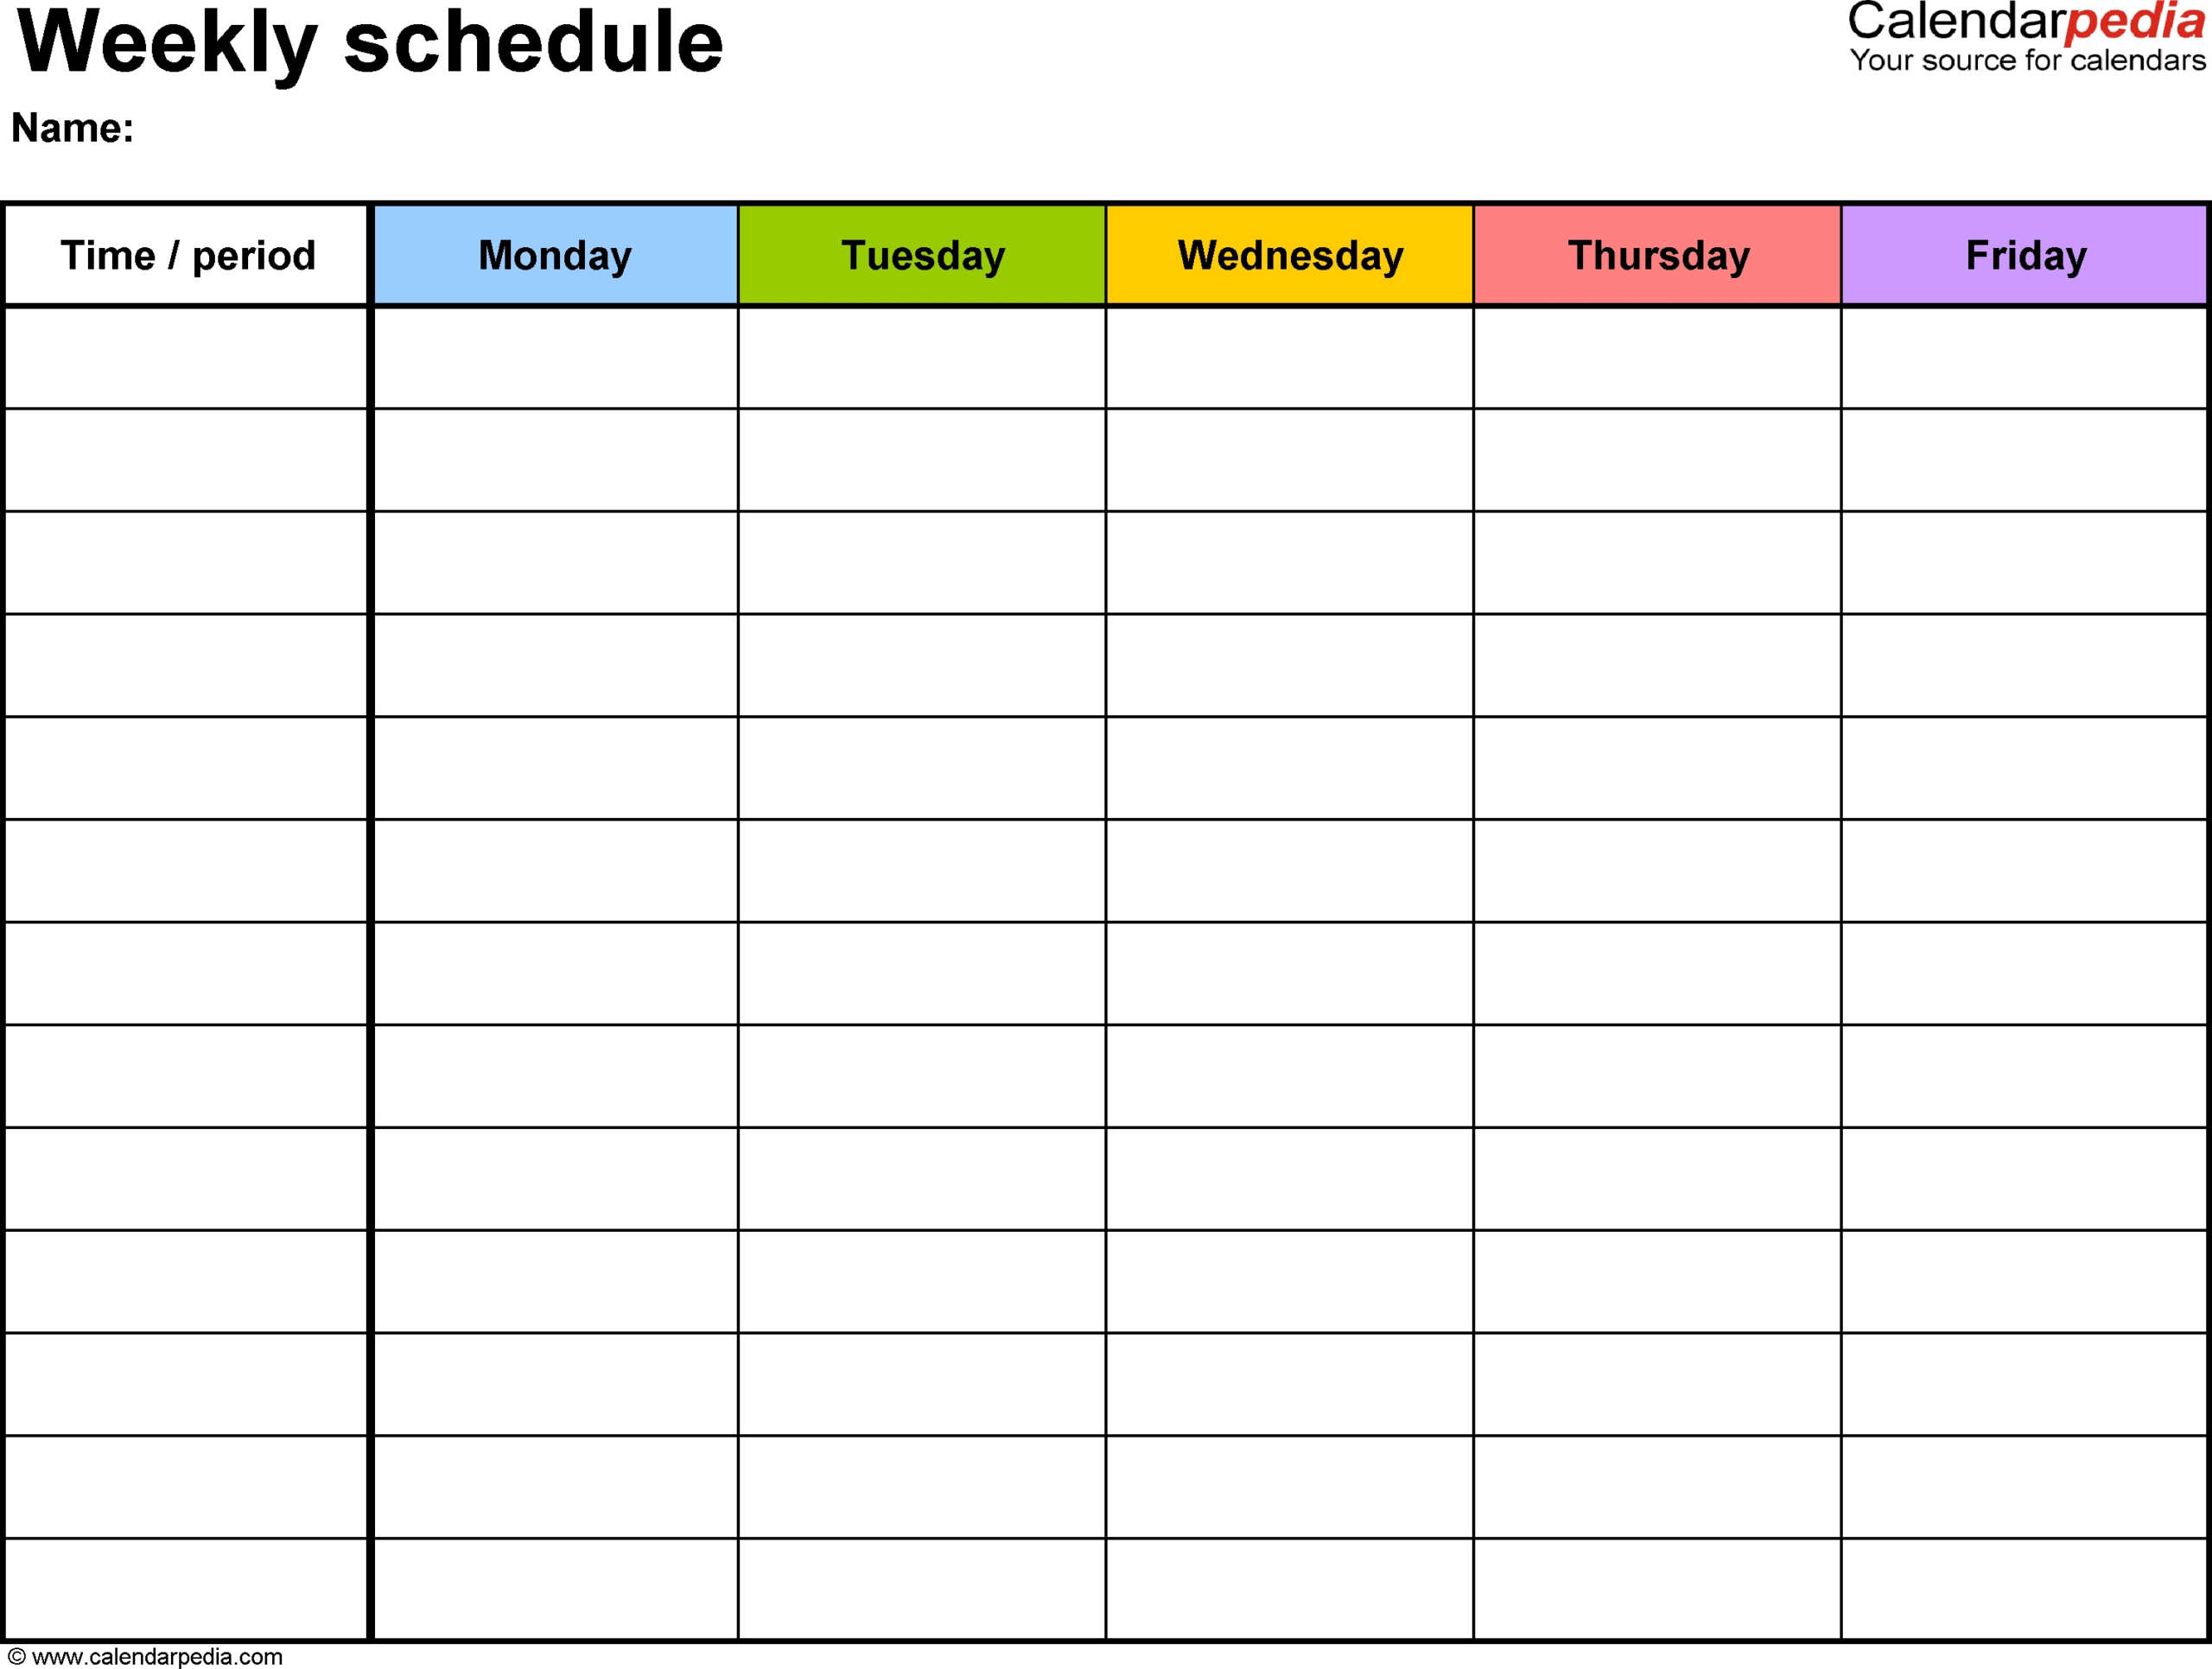 Monday Through Friday Calendar With Times - Calendar Inspiration Design